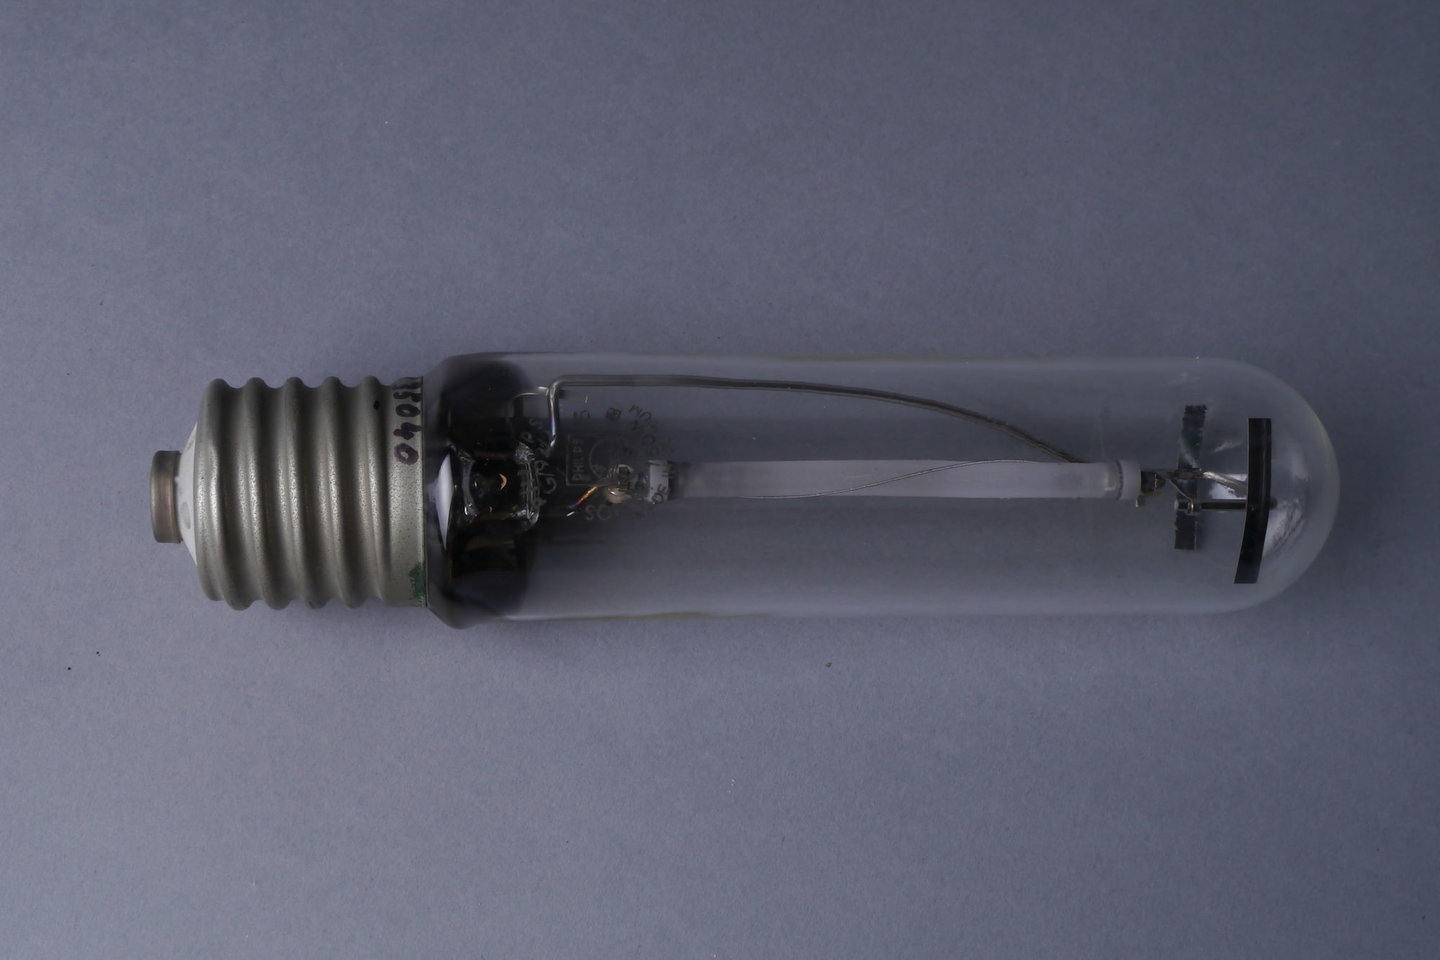 Hogedruk natriumlamp van het merk Philips